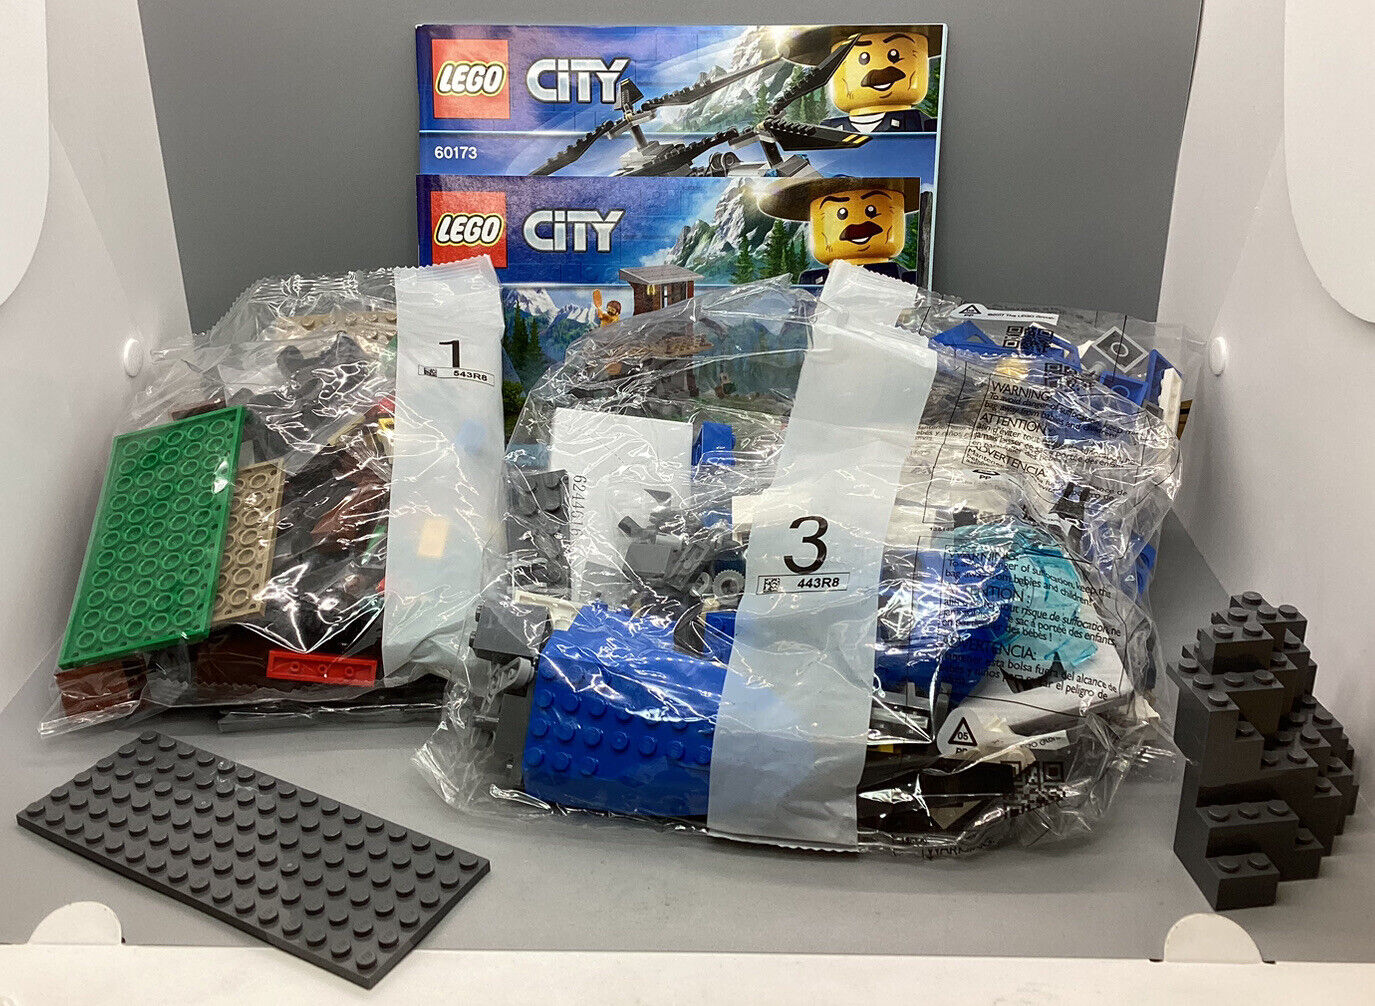 Lego City - Mountain Arrest - Missing Pieces LEGO 60173